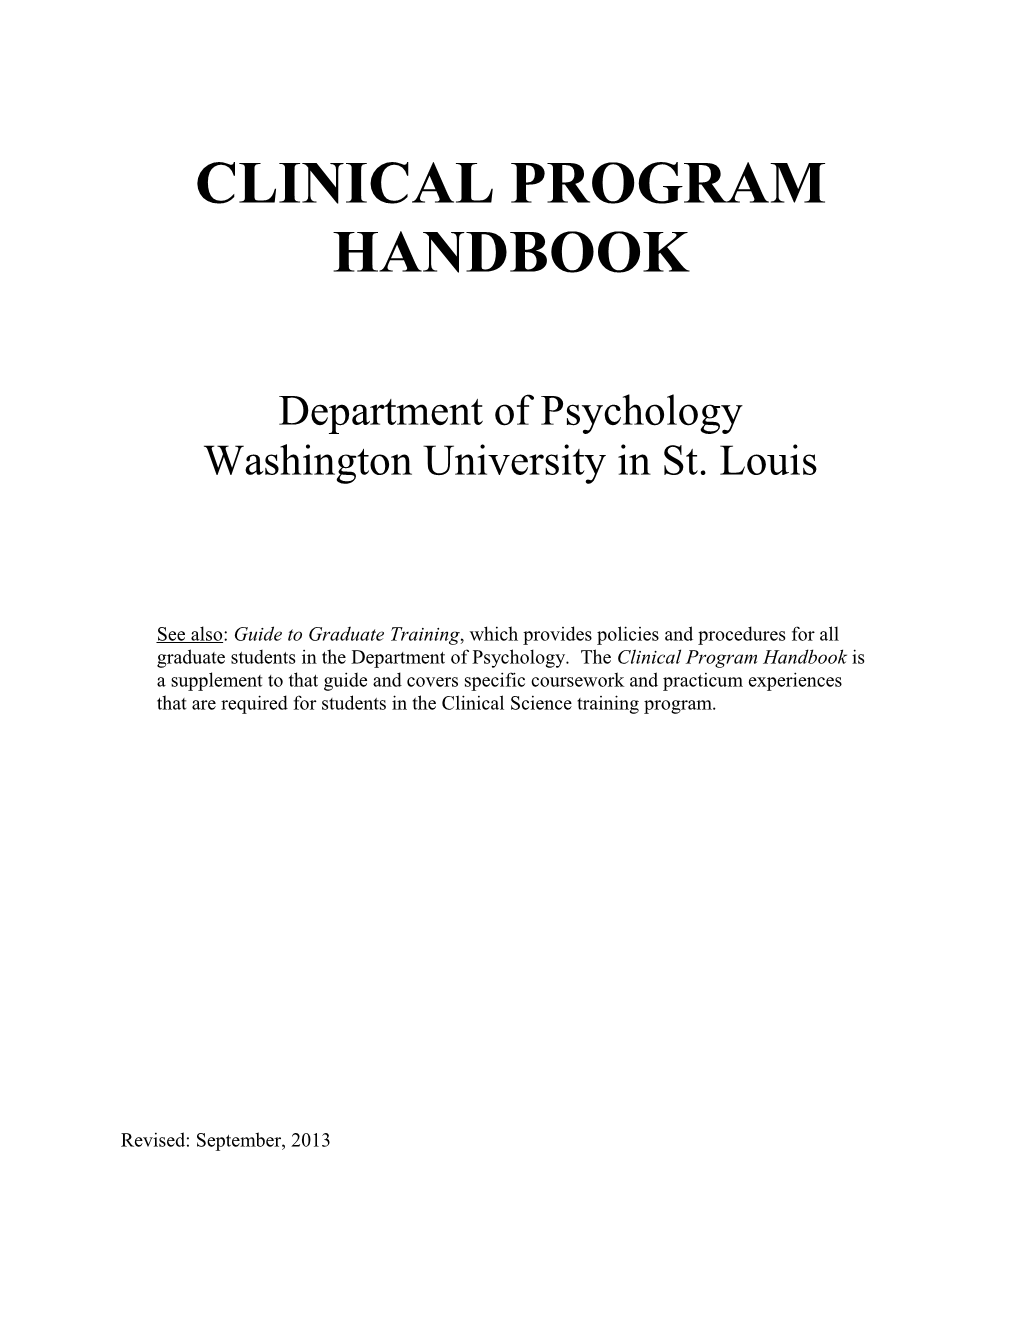 Clinical Program